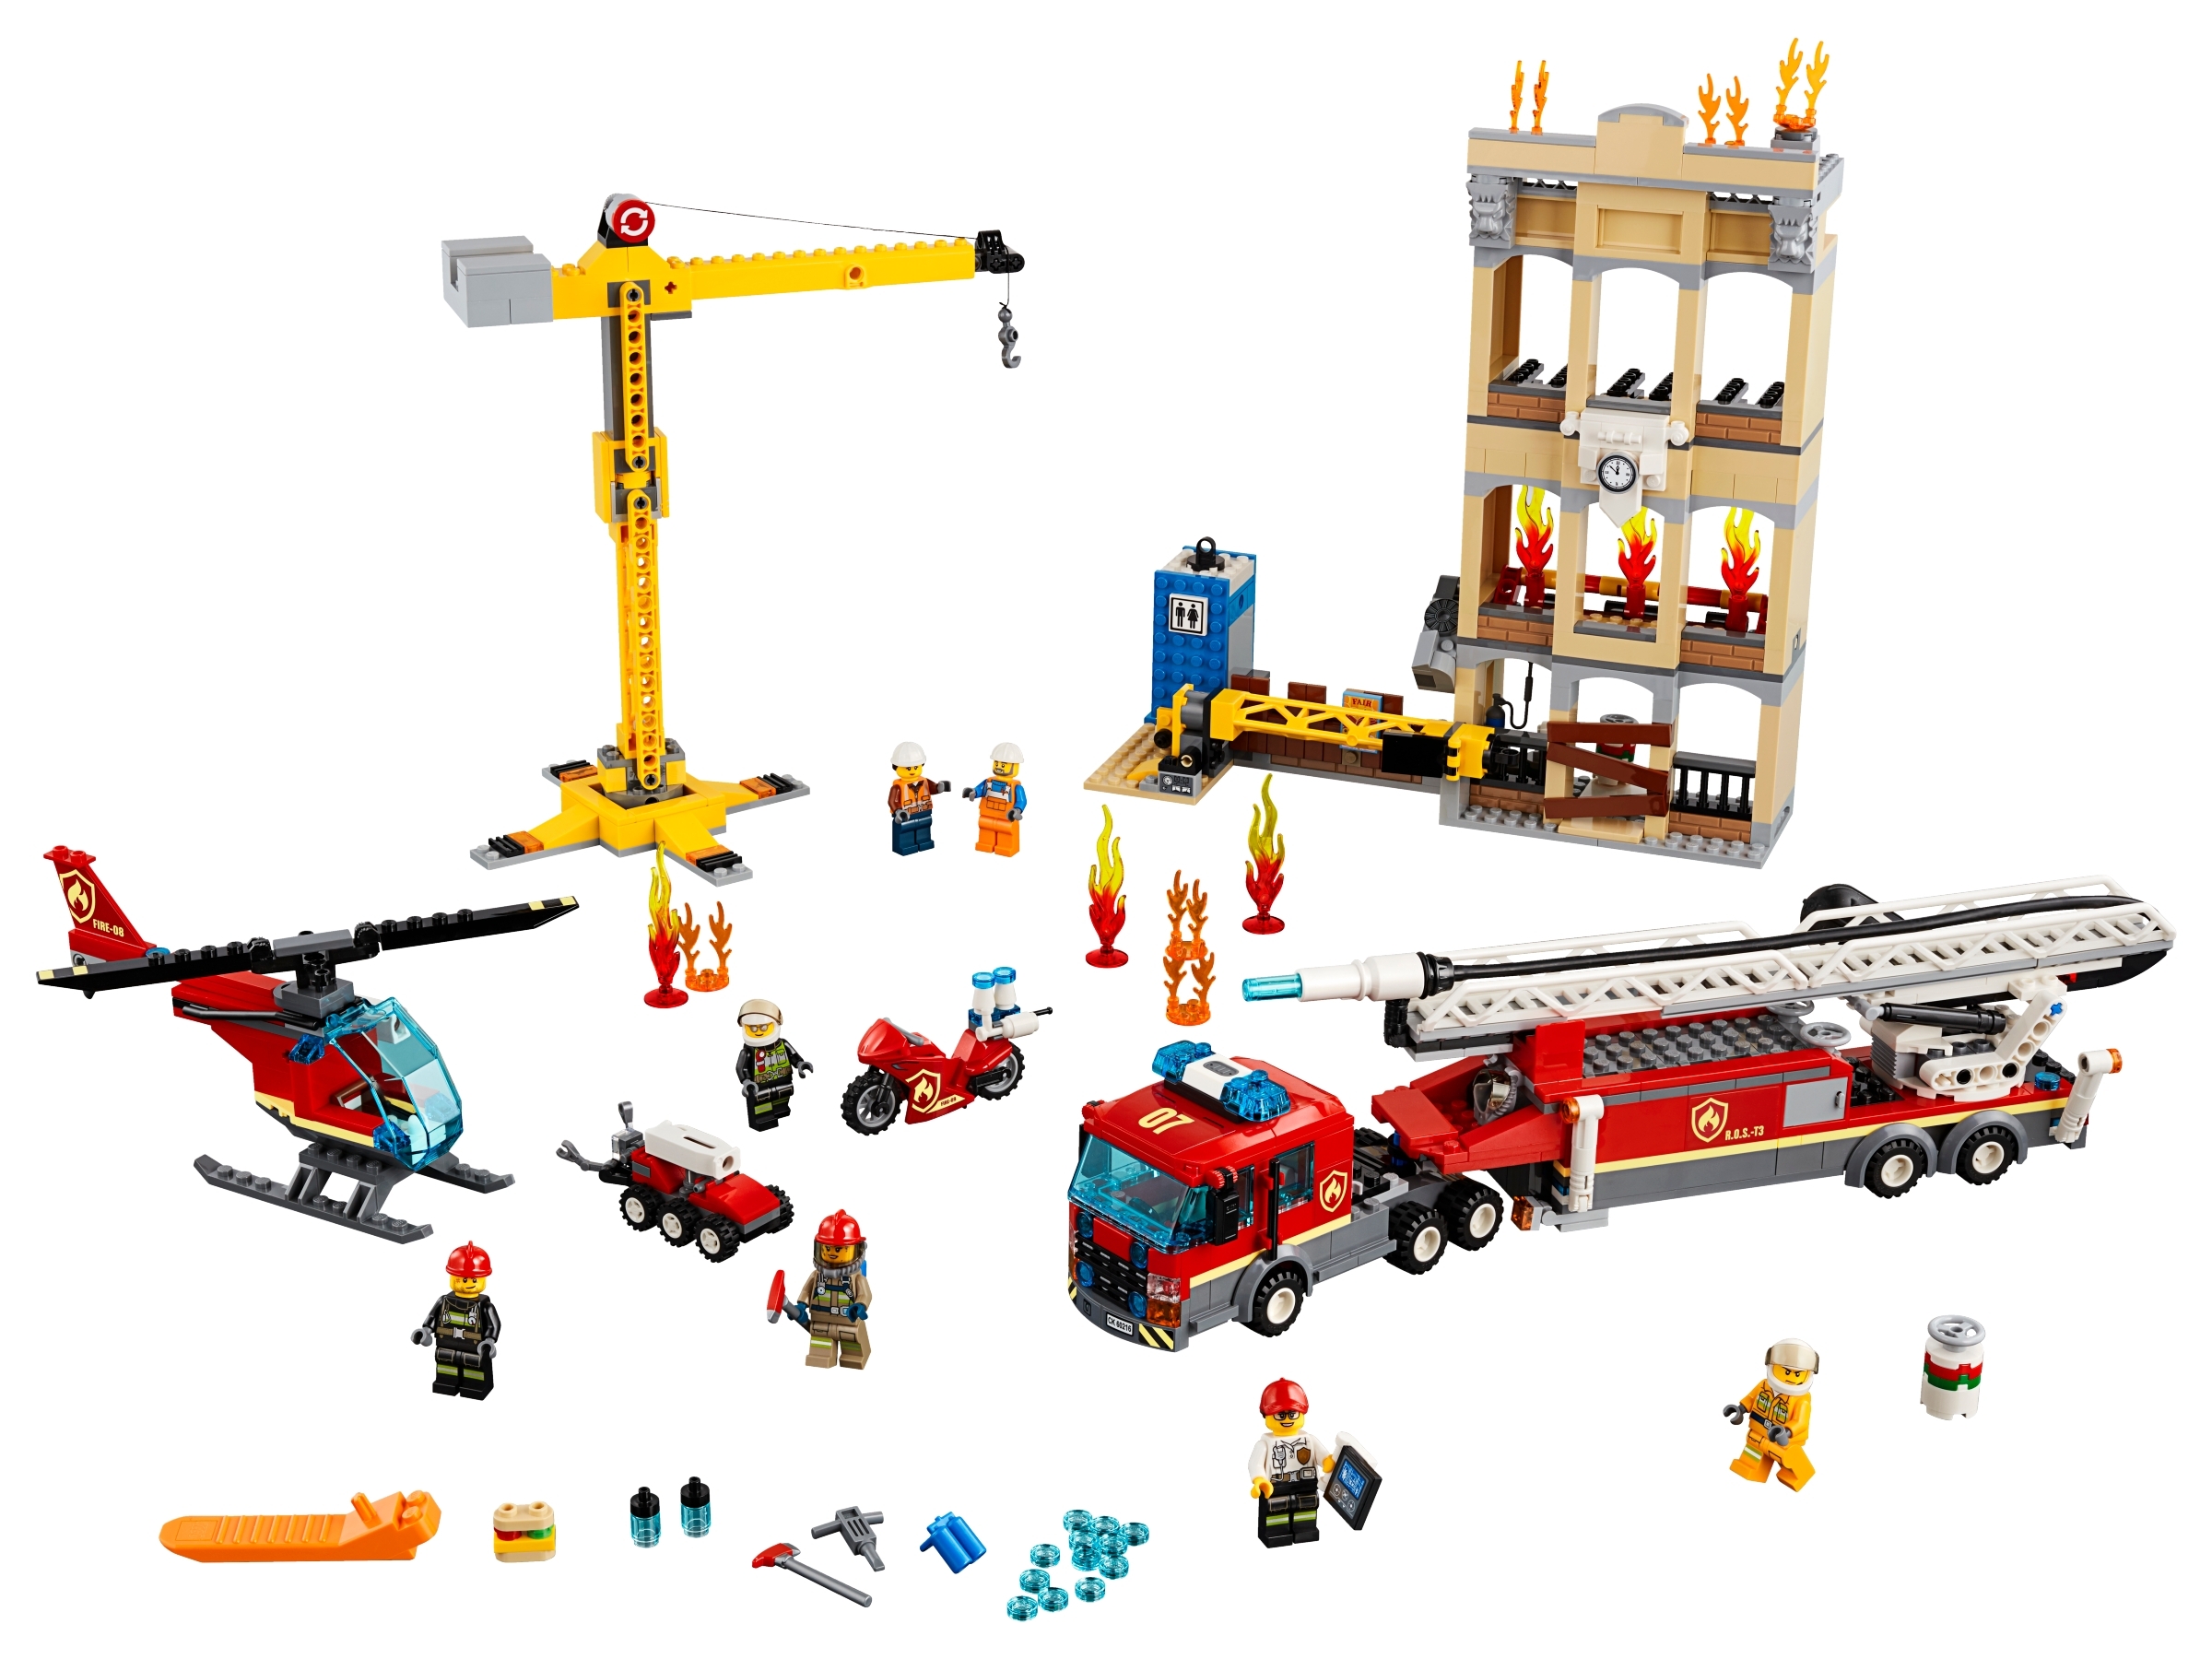 lego city building site